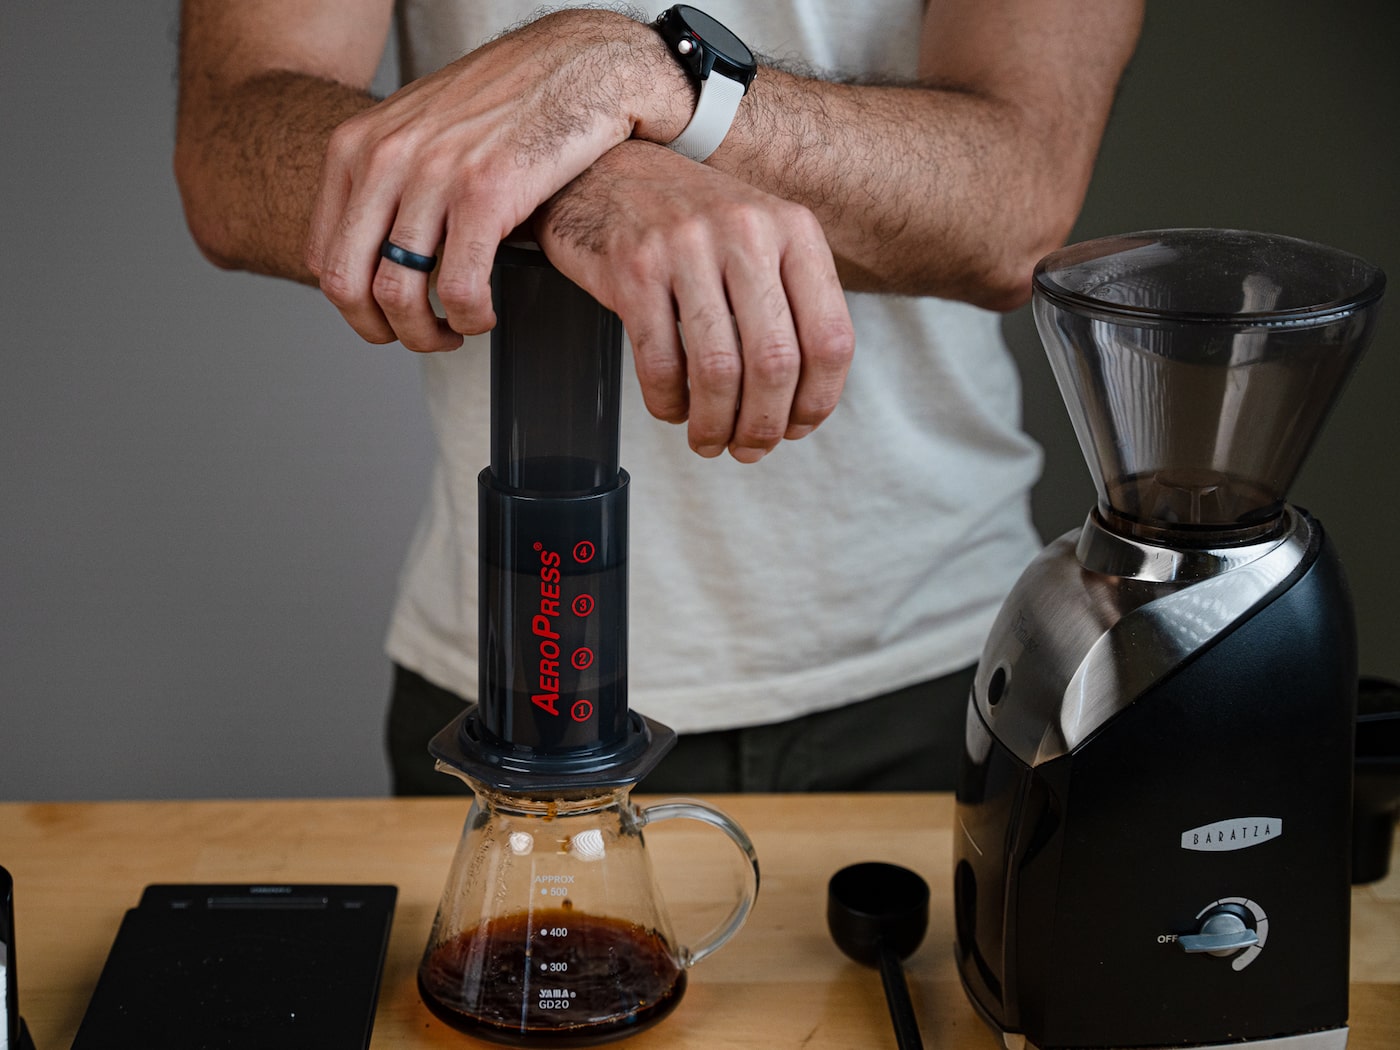 Chemex Brew Guide  Perfect For Two – Kaldi's Coffee